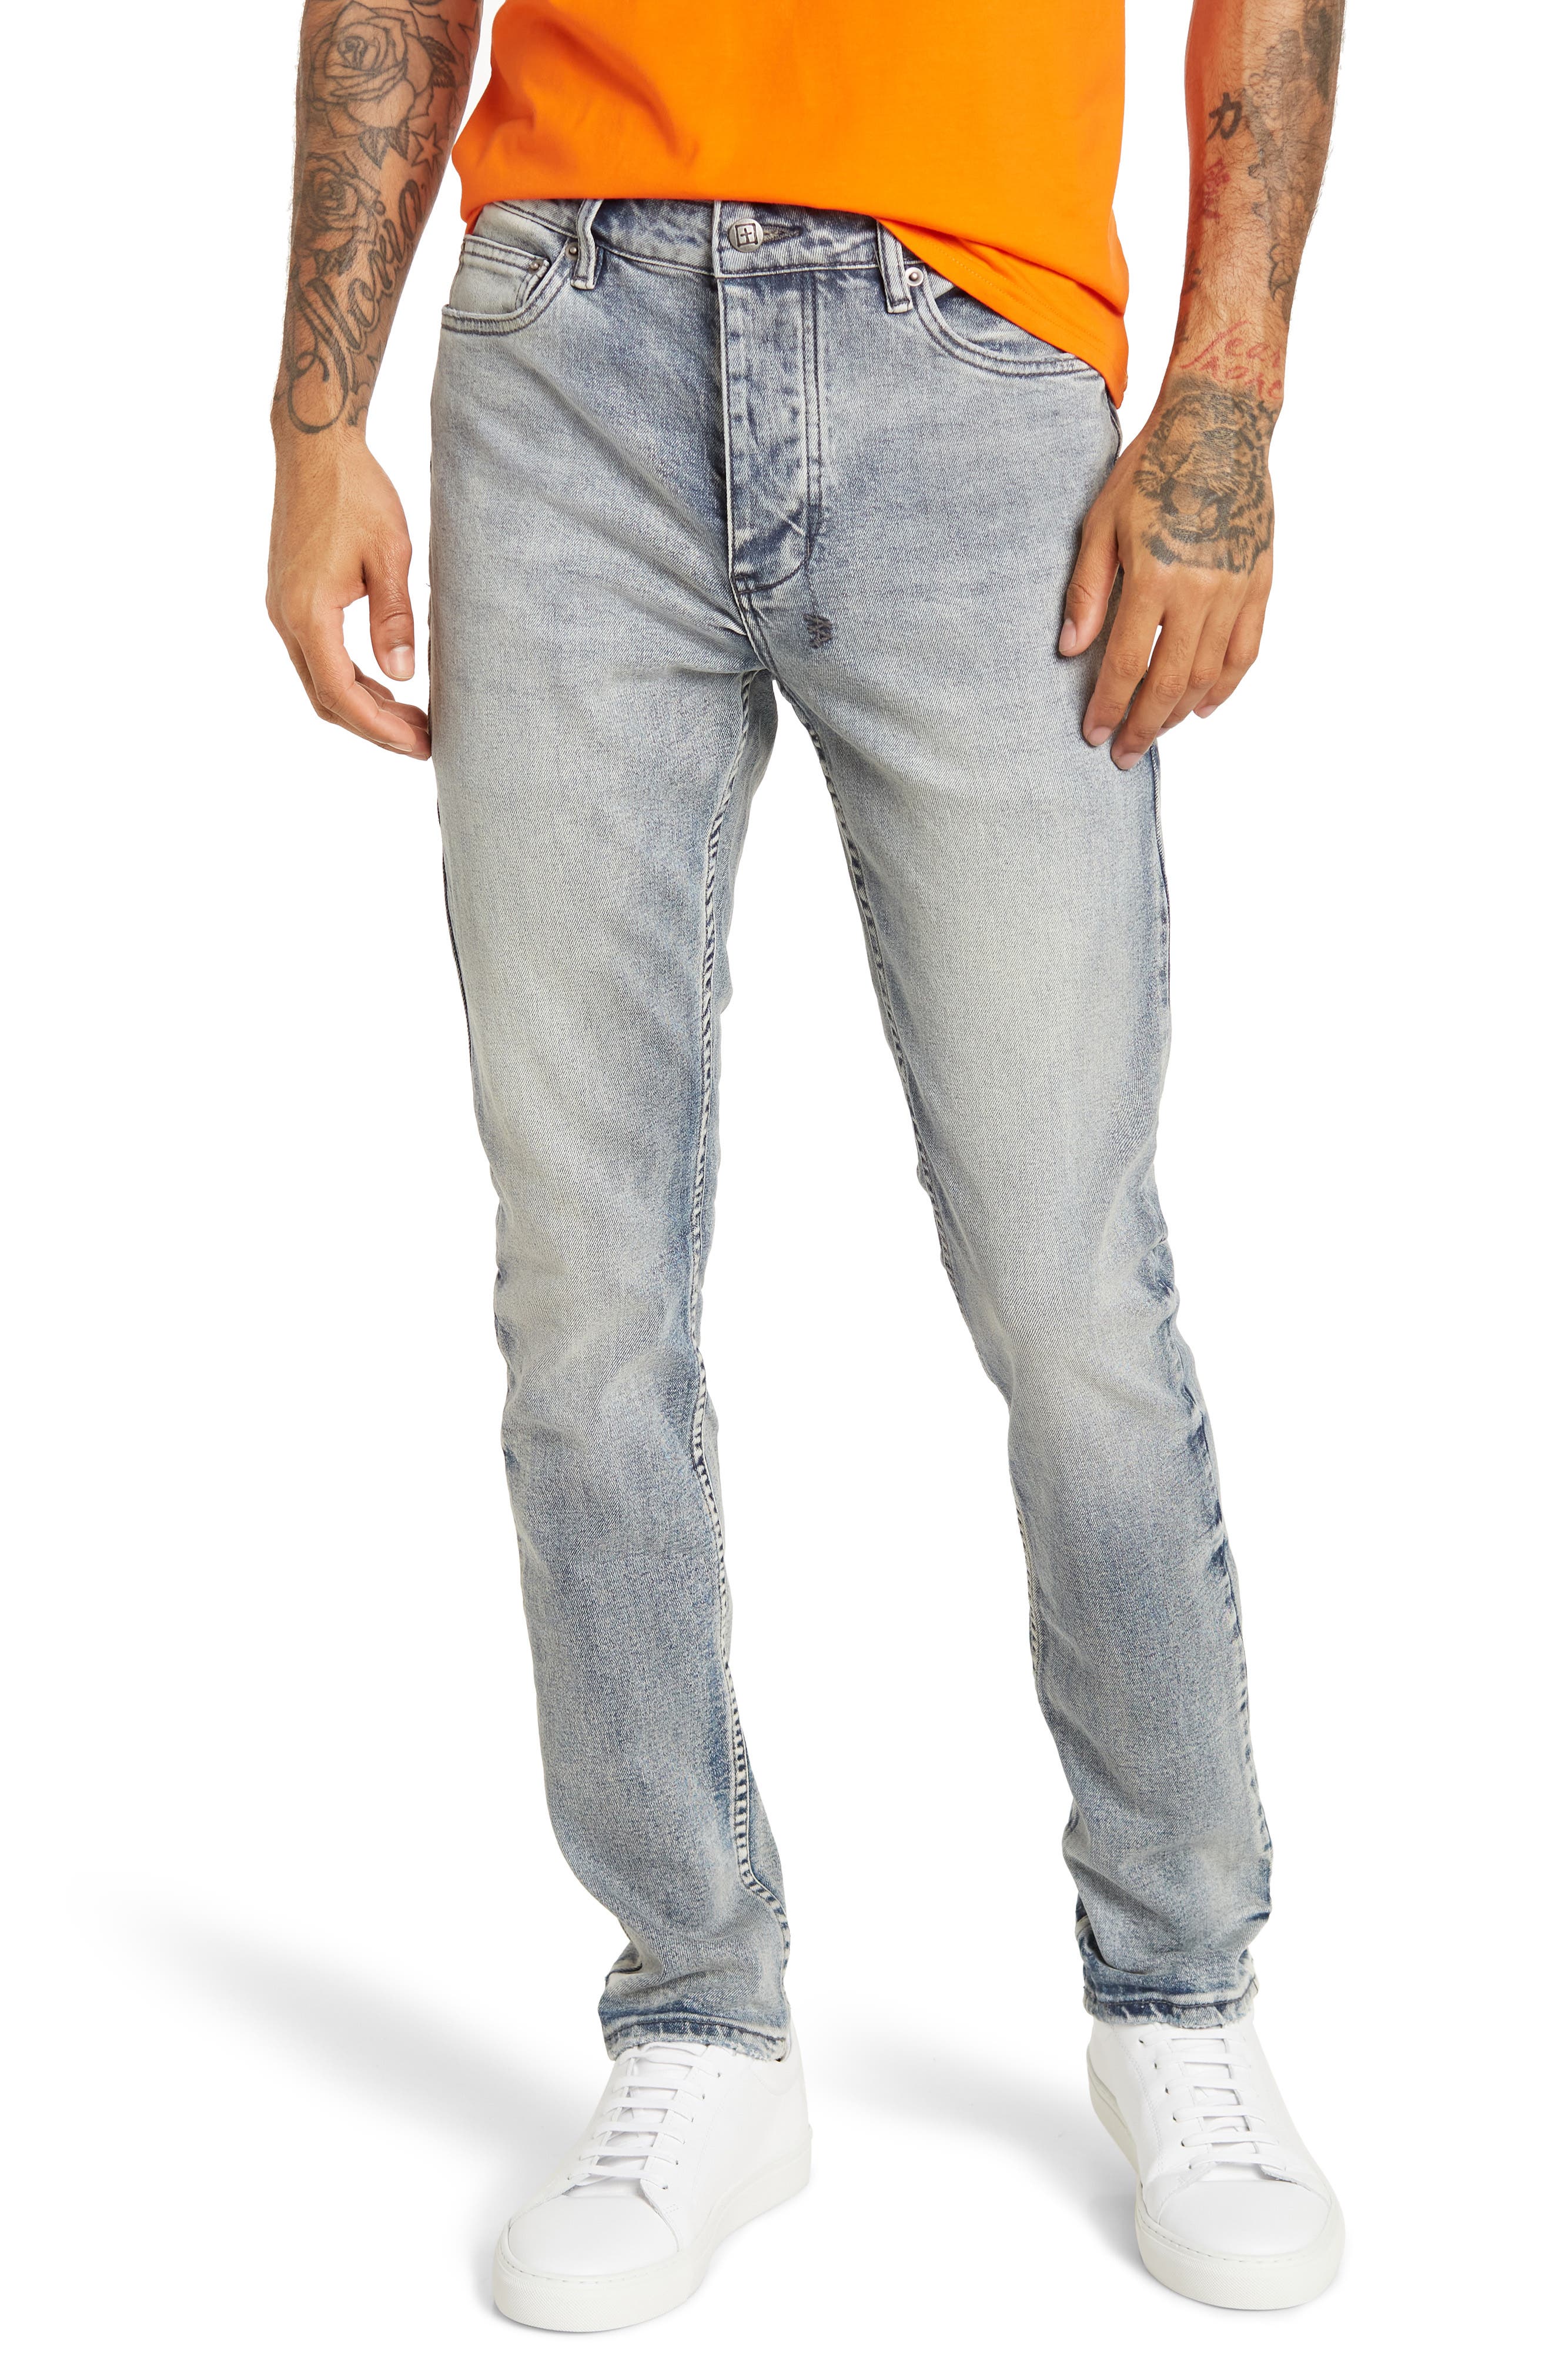 Ksubi Chitch Half Way Straight Leg Jeans in Denim at Nordstrom, Size 33